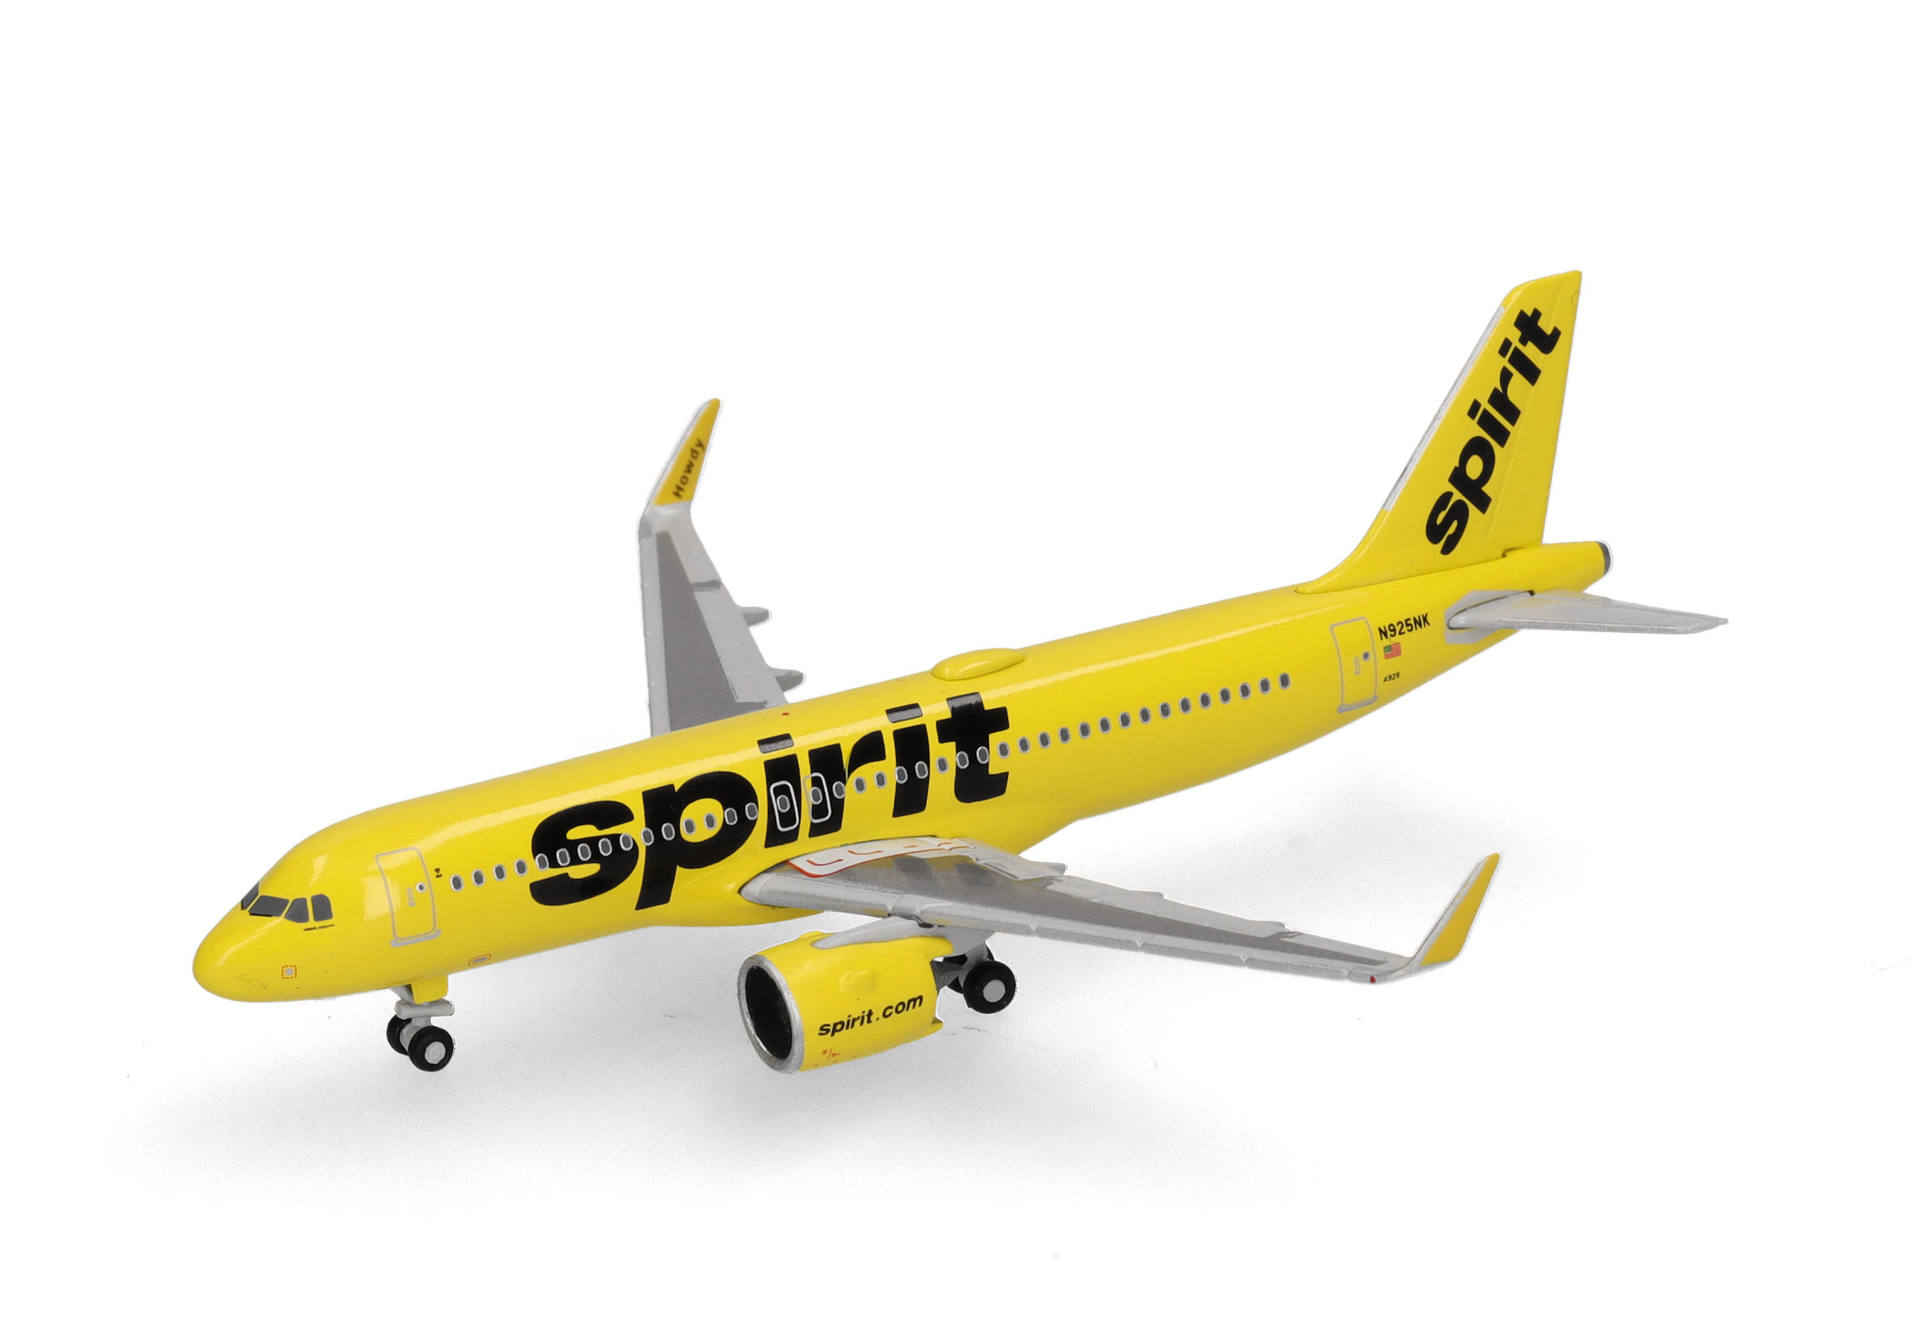 Spirit Airlines Airbus A320neo